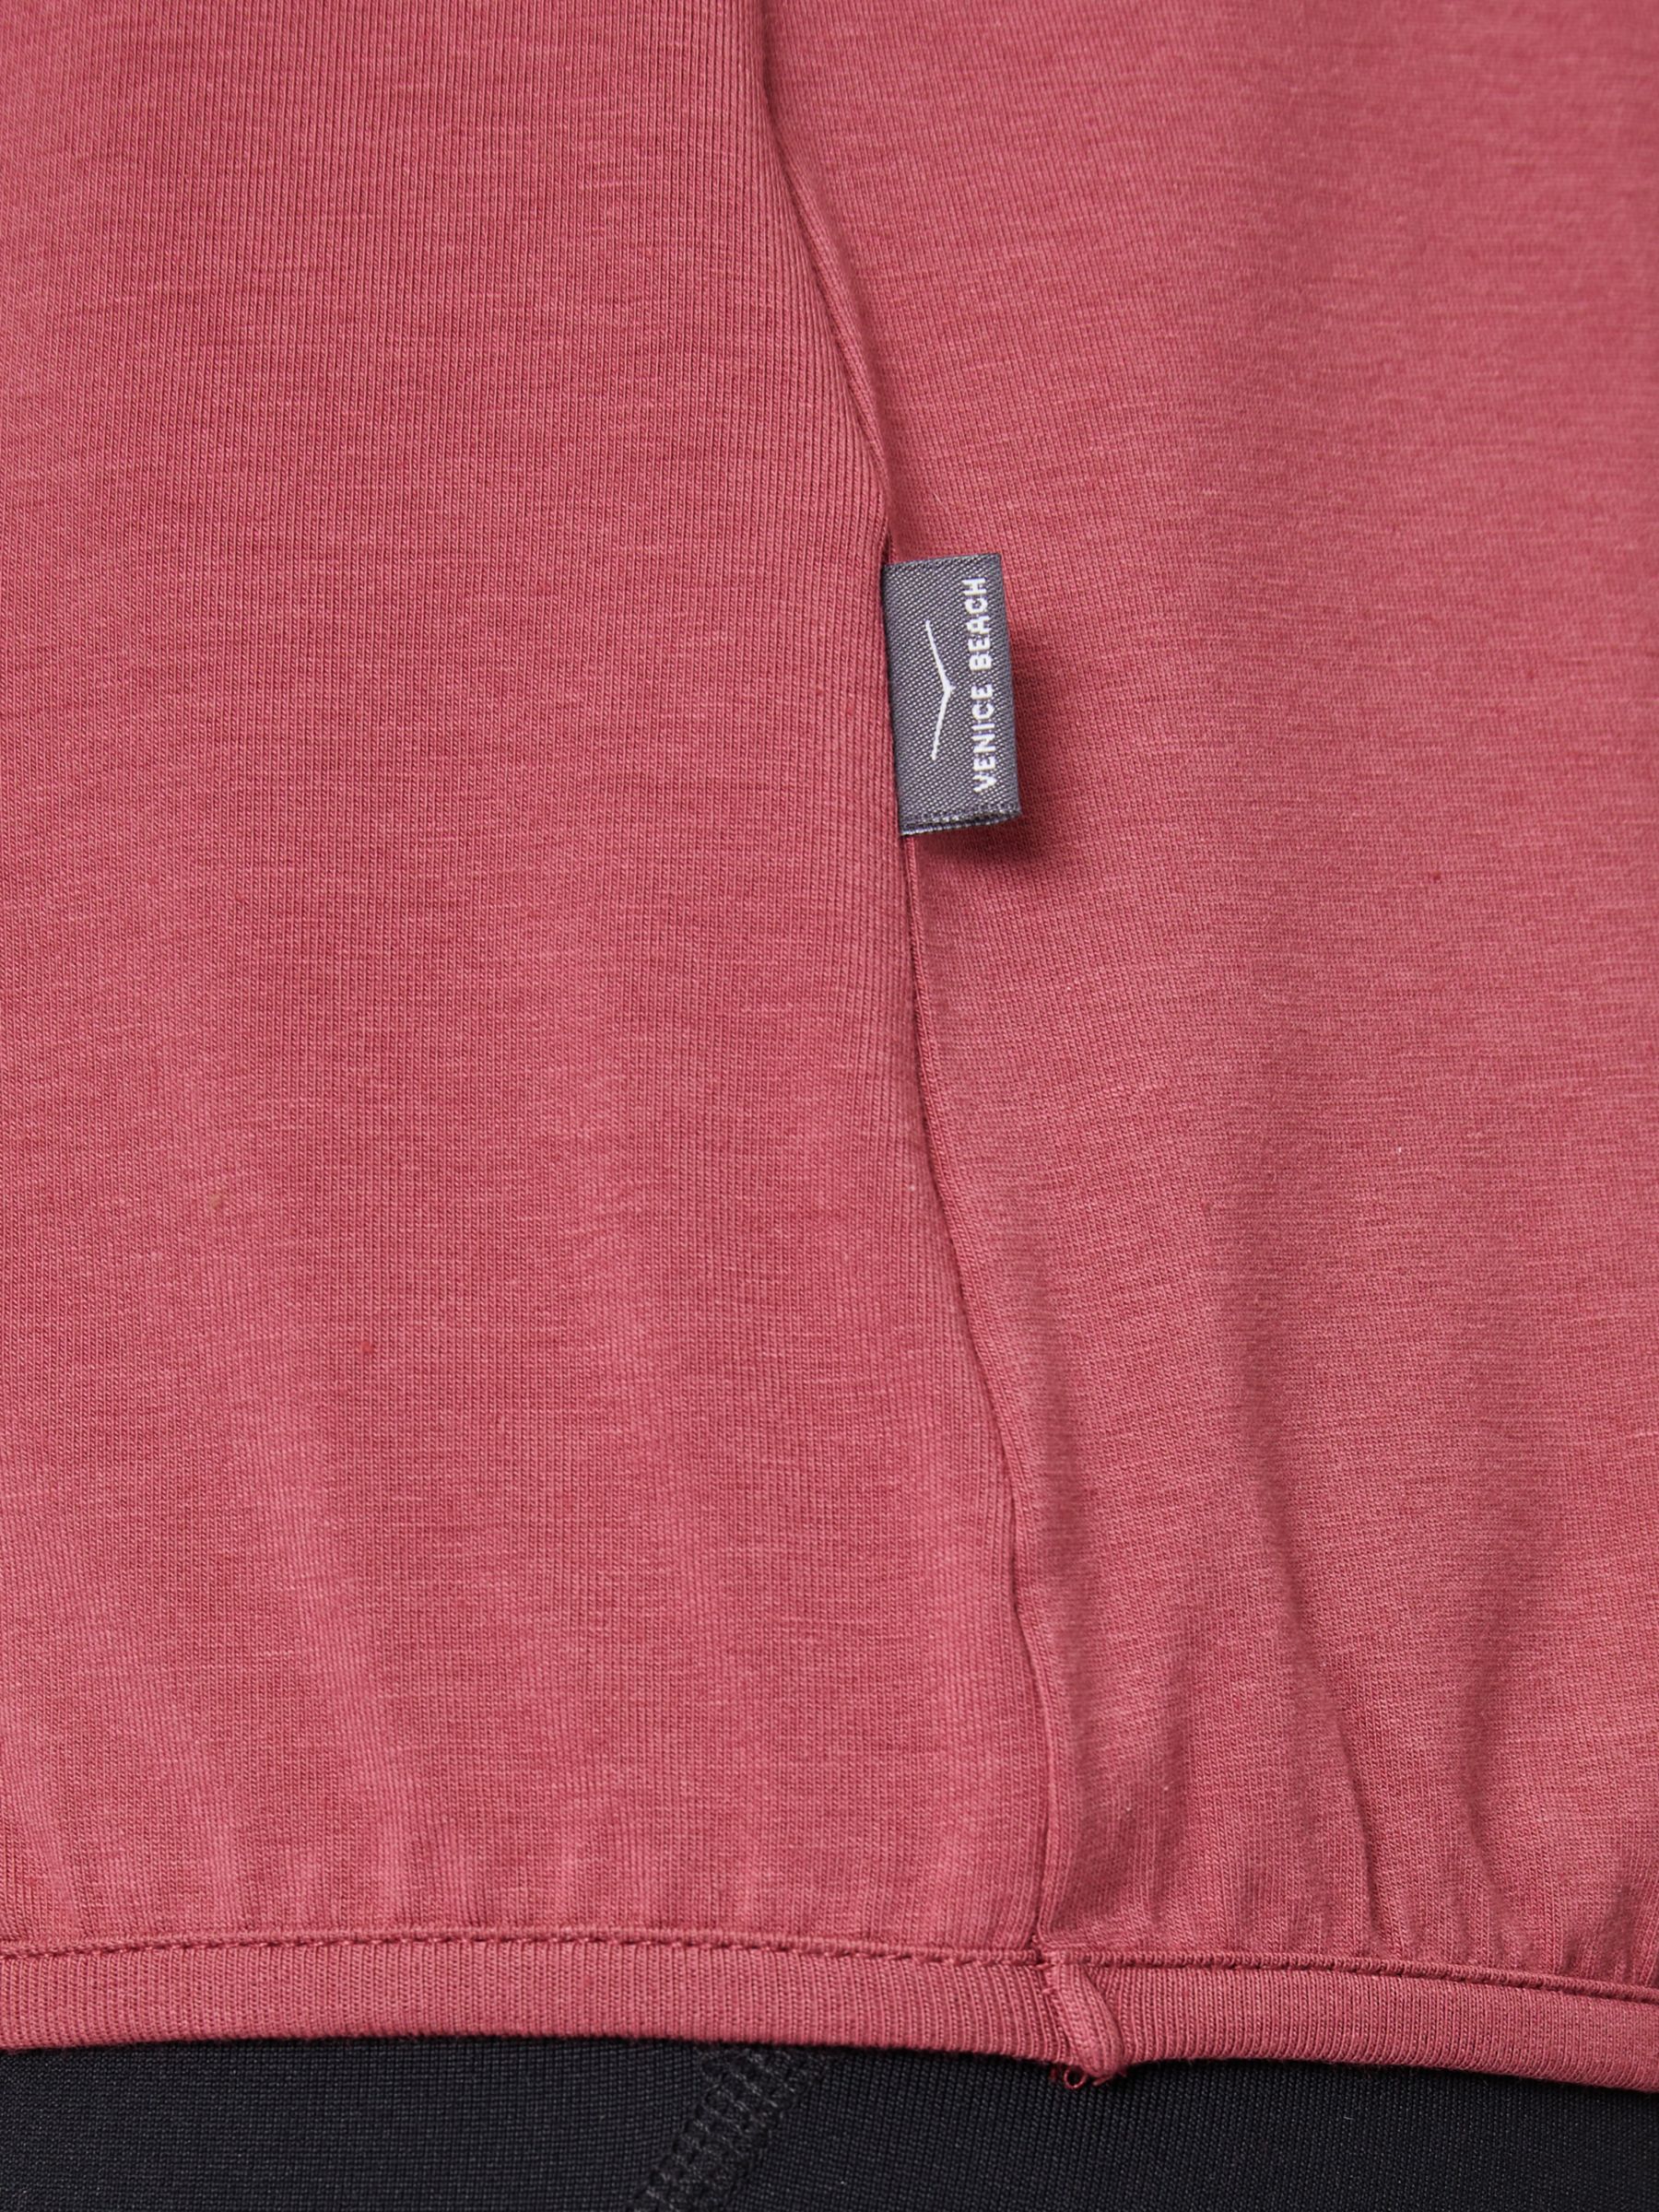 Venice Beach Rylee Sweatshirt, Deep Red, XS